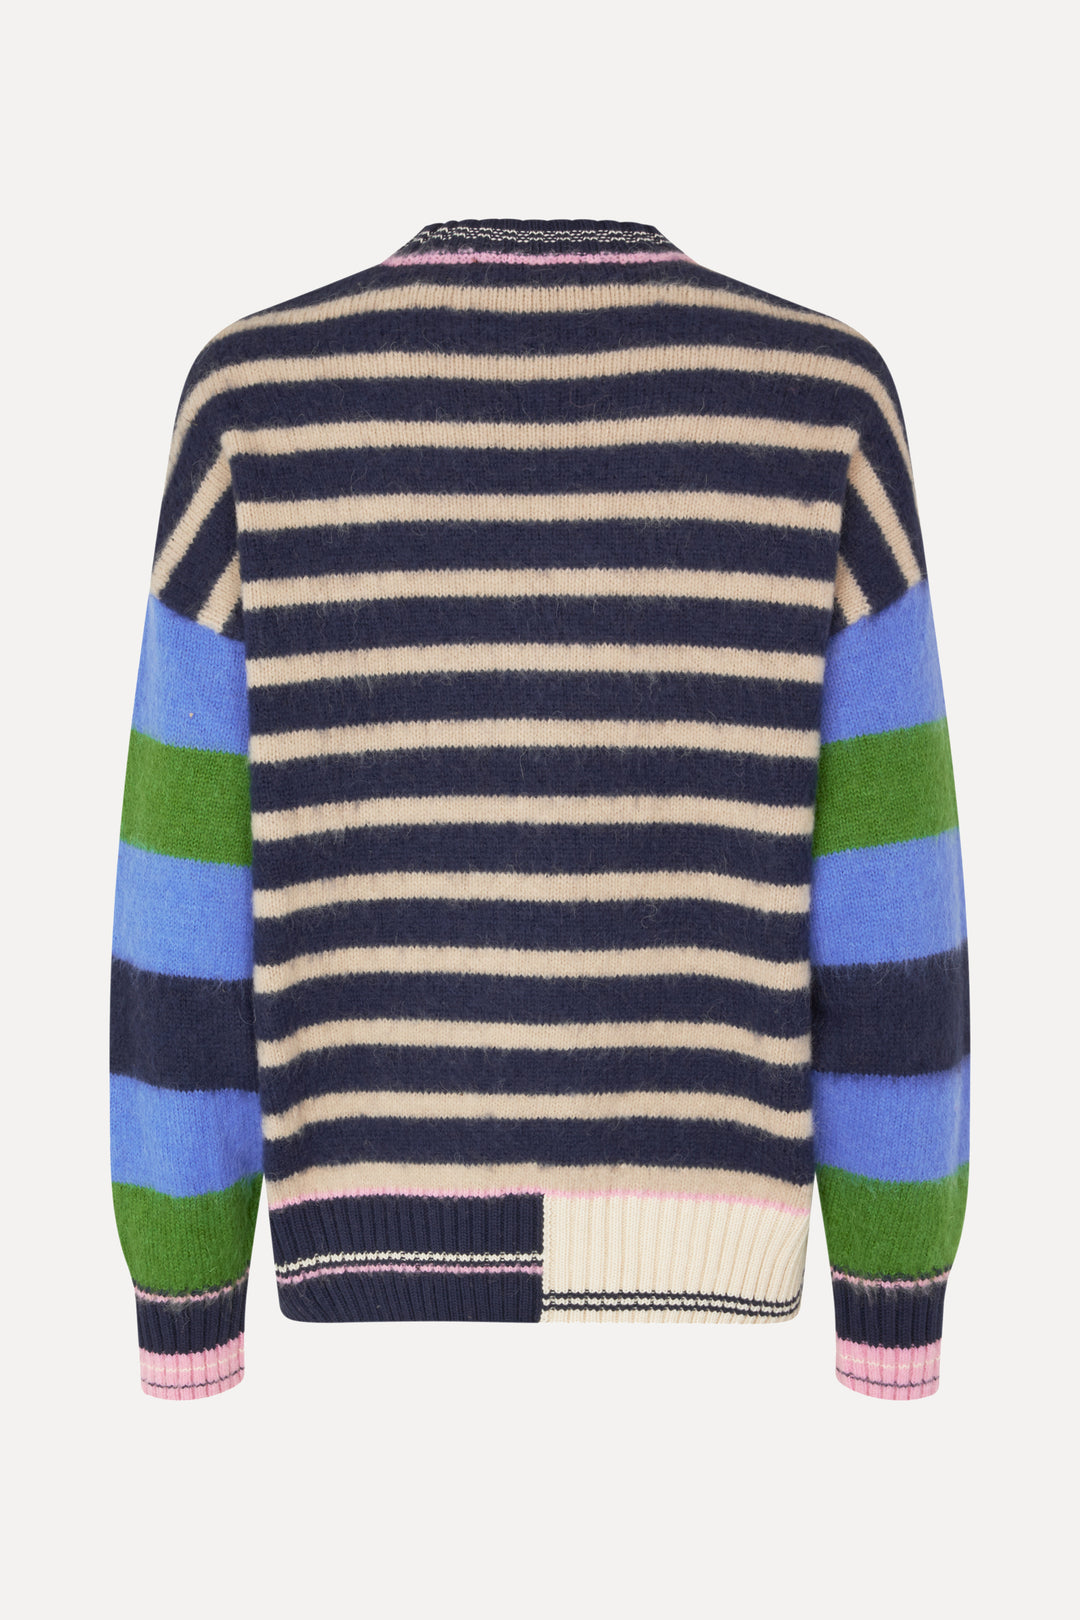 Stine Goya Shea Sweater - Candy Stripes